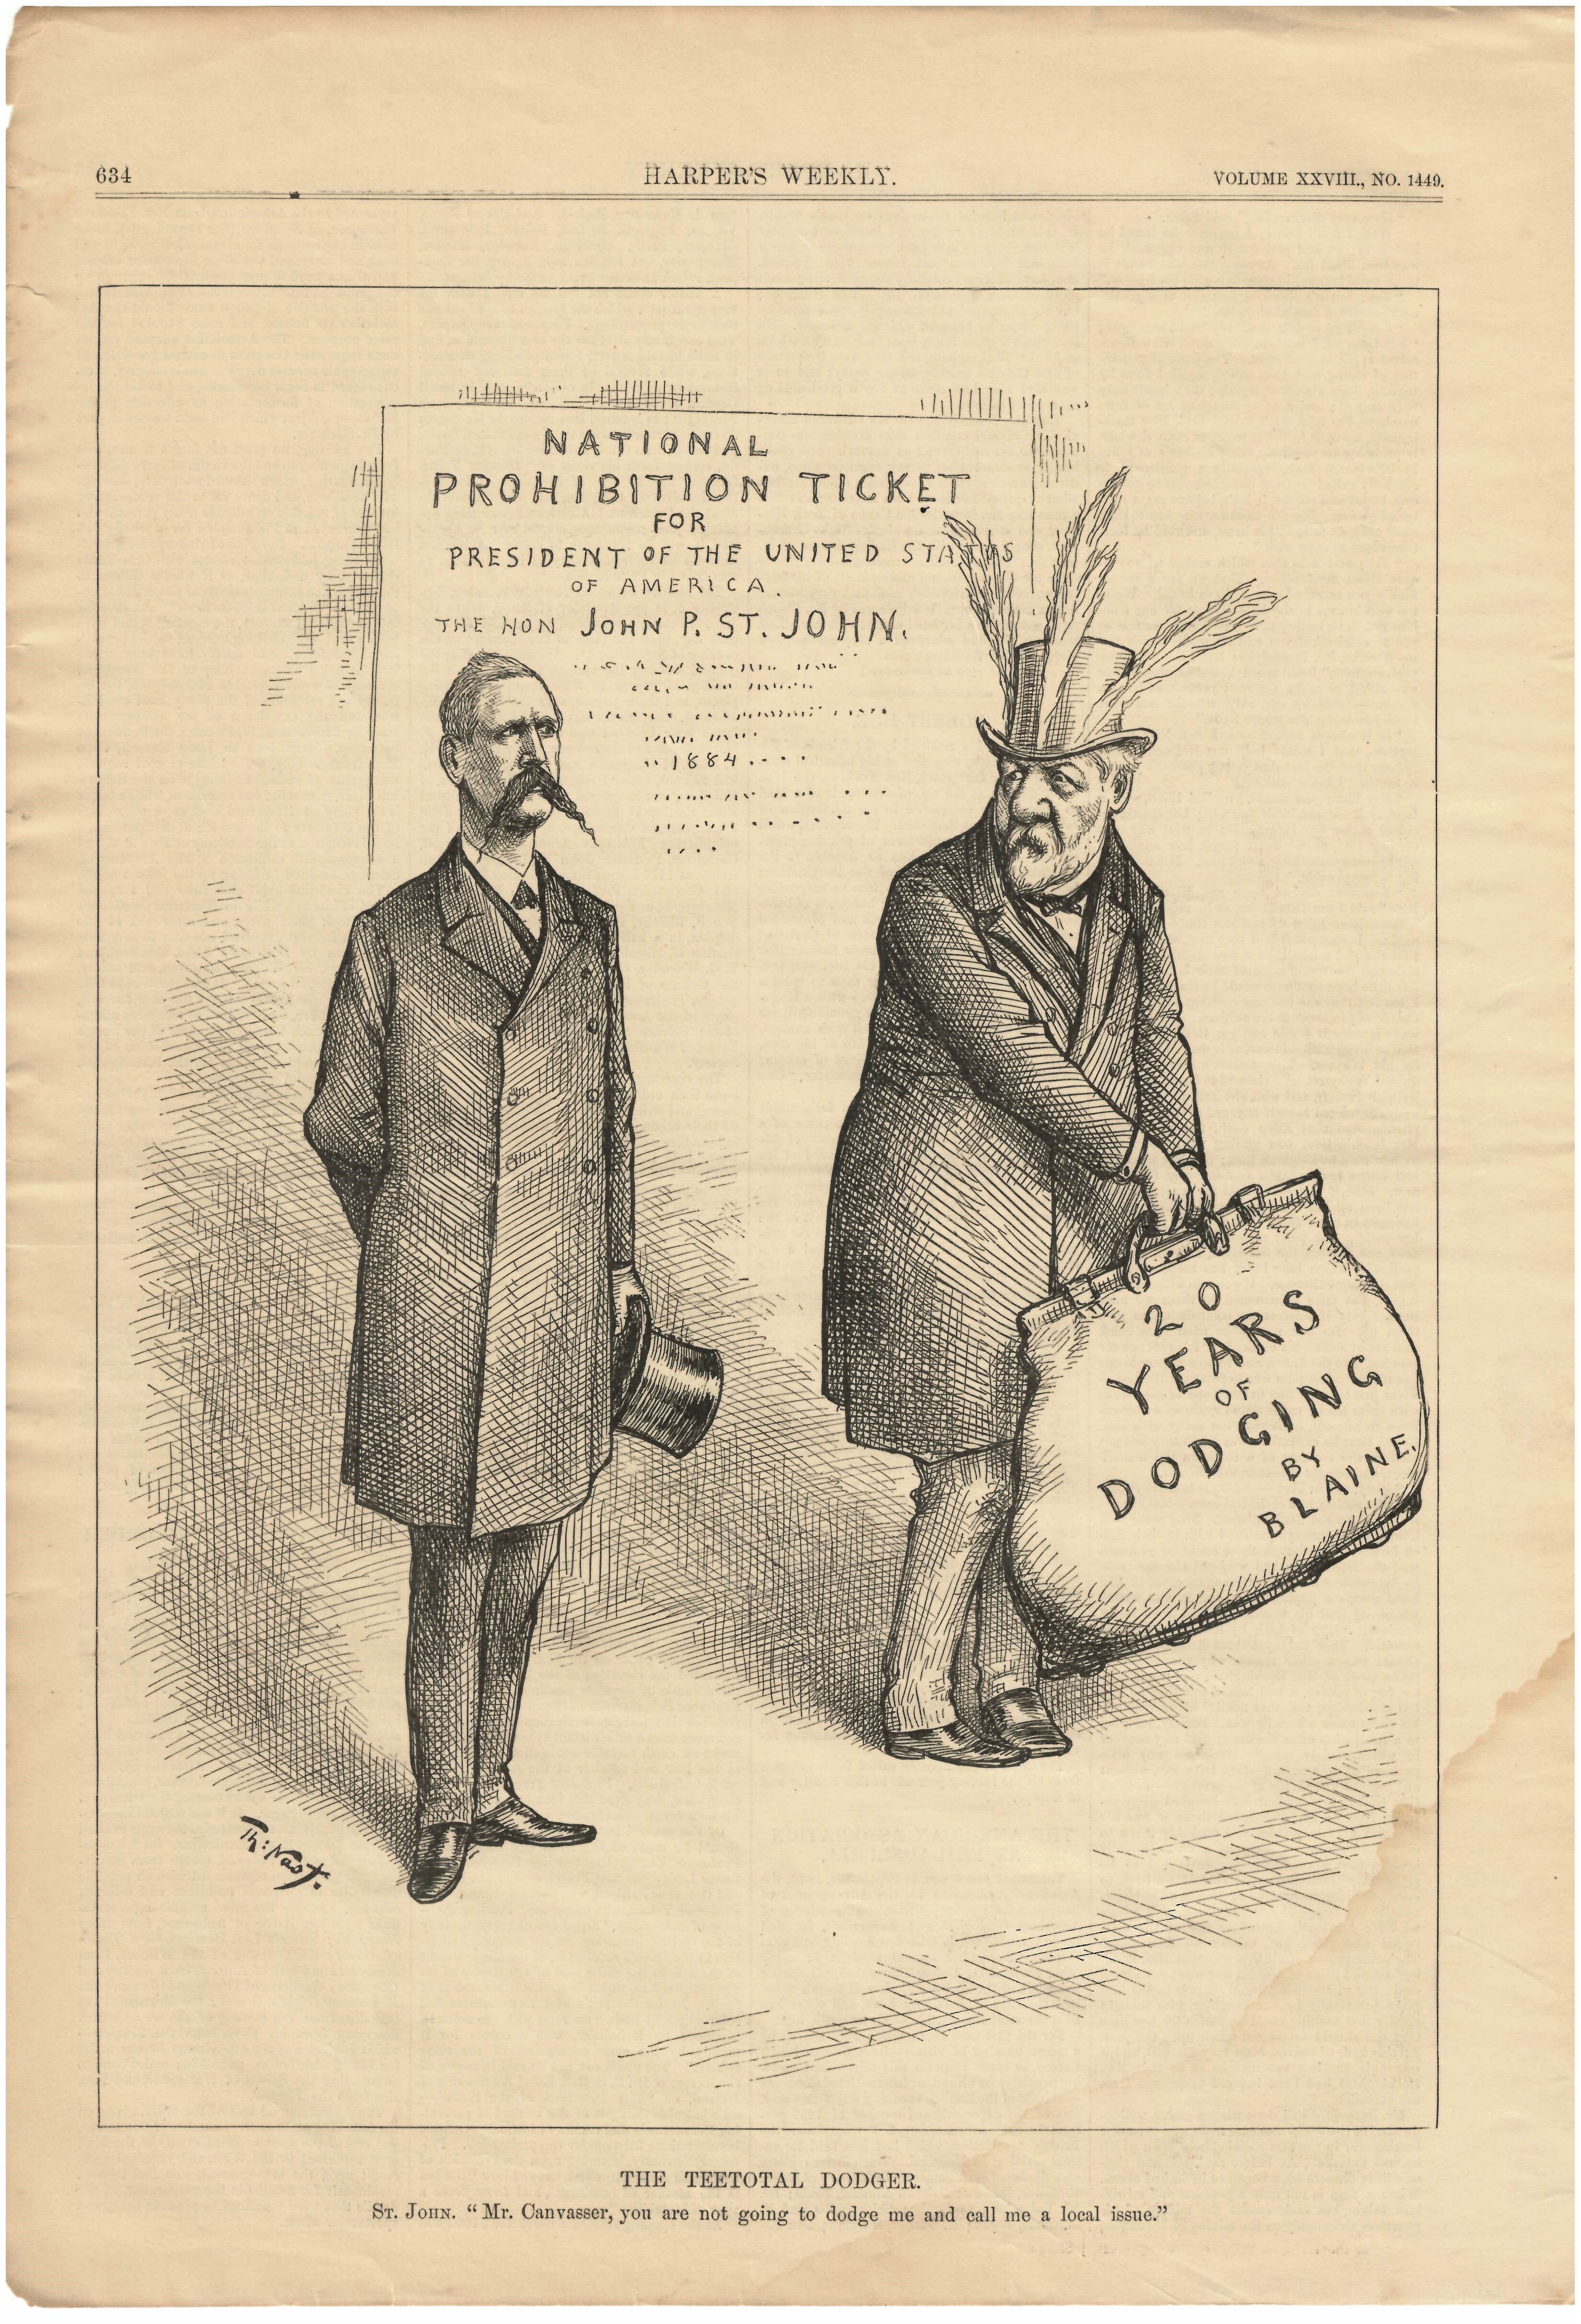 Harper's Weekly September 27, 1884 The Teetotal Dodger Ad Print